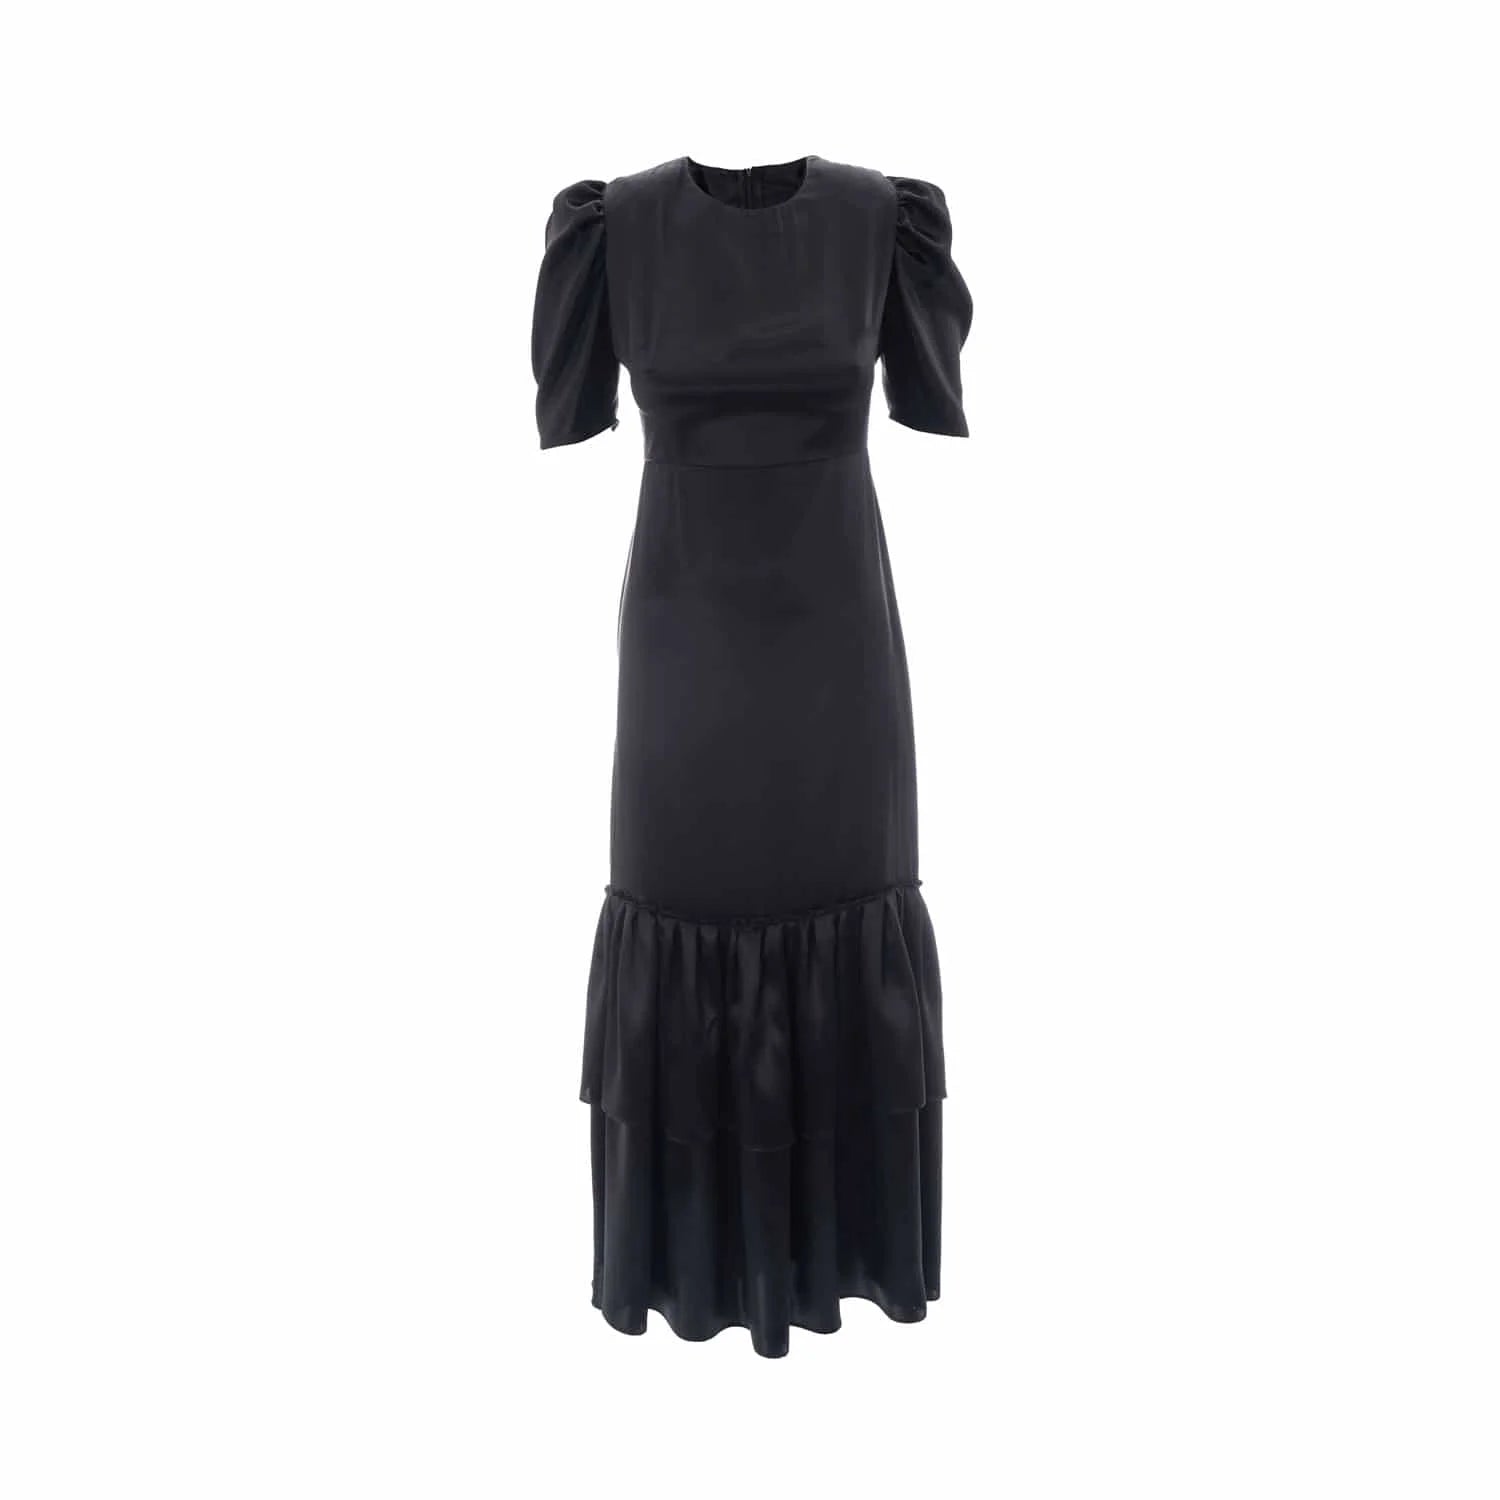 “ LADY SOFIA” dress in black silk